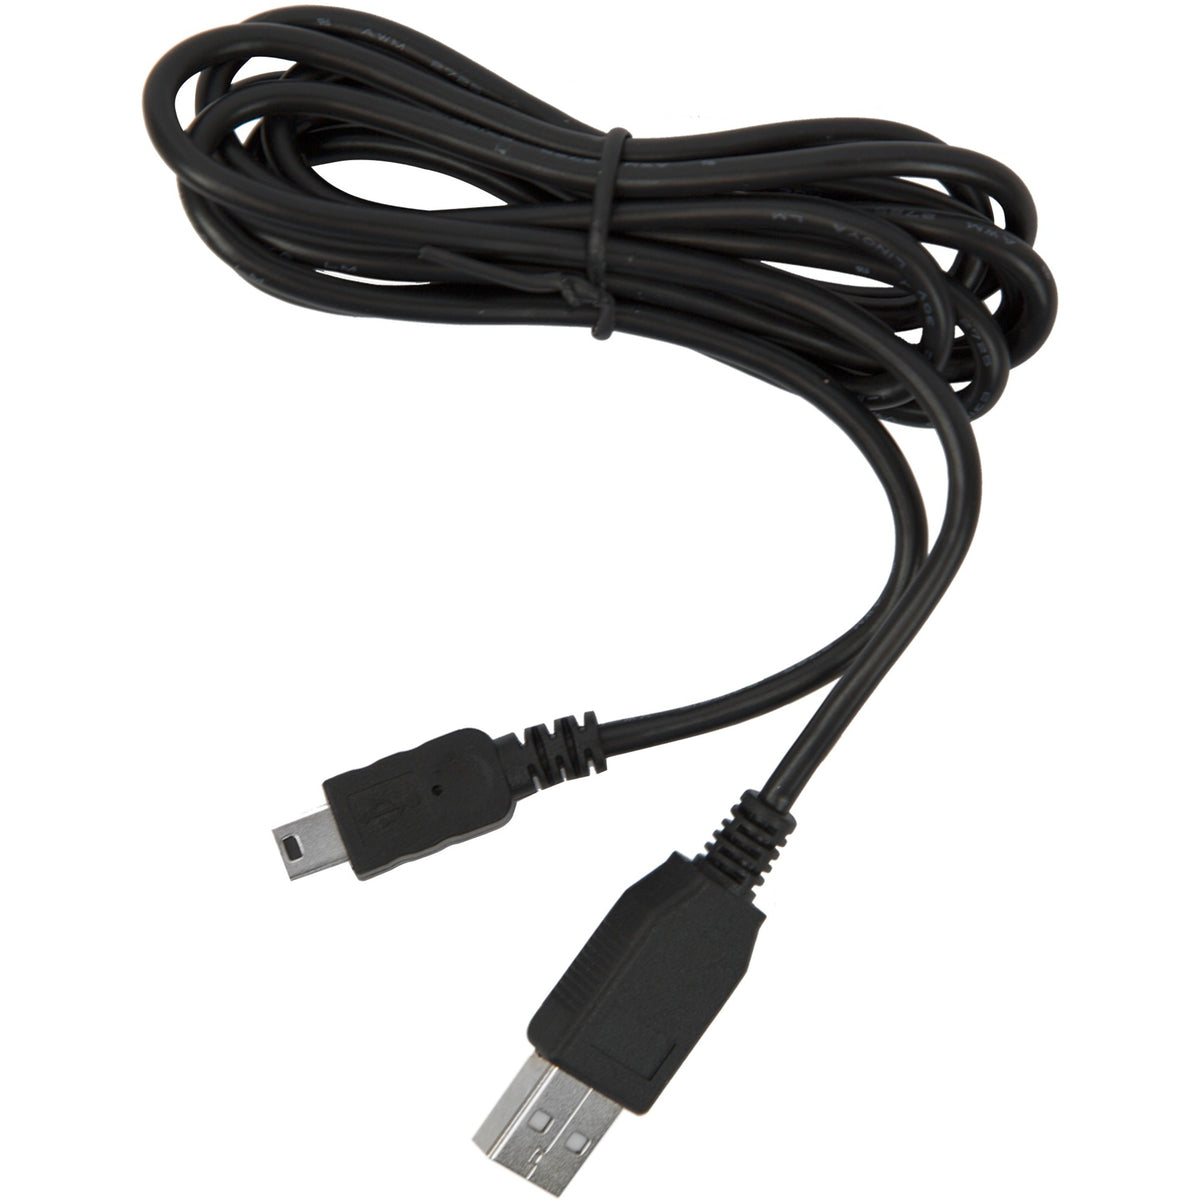 Jabra USB Cable - 14201-13